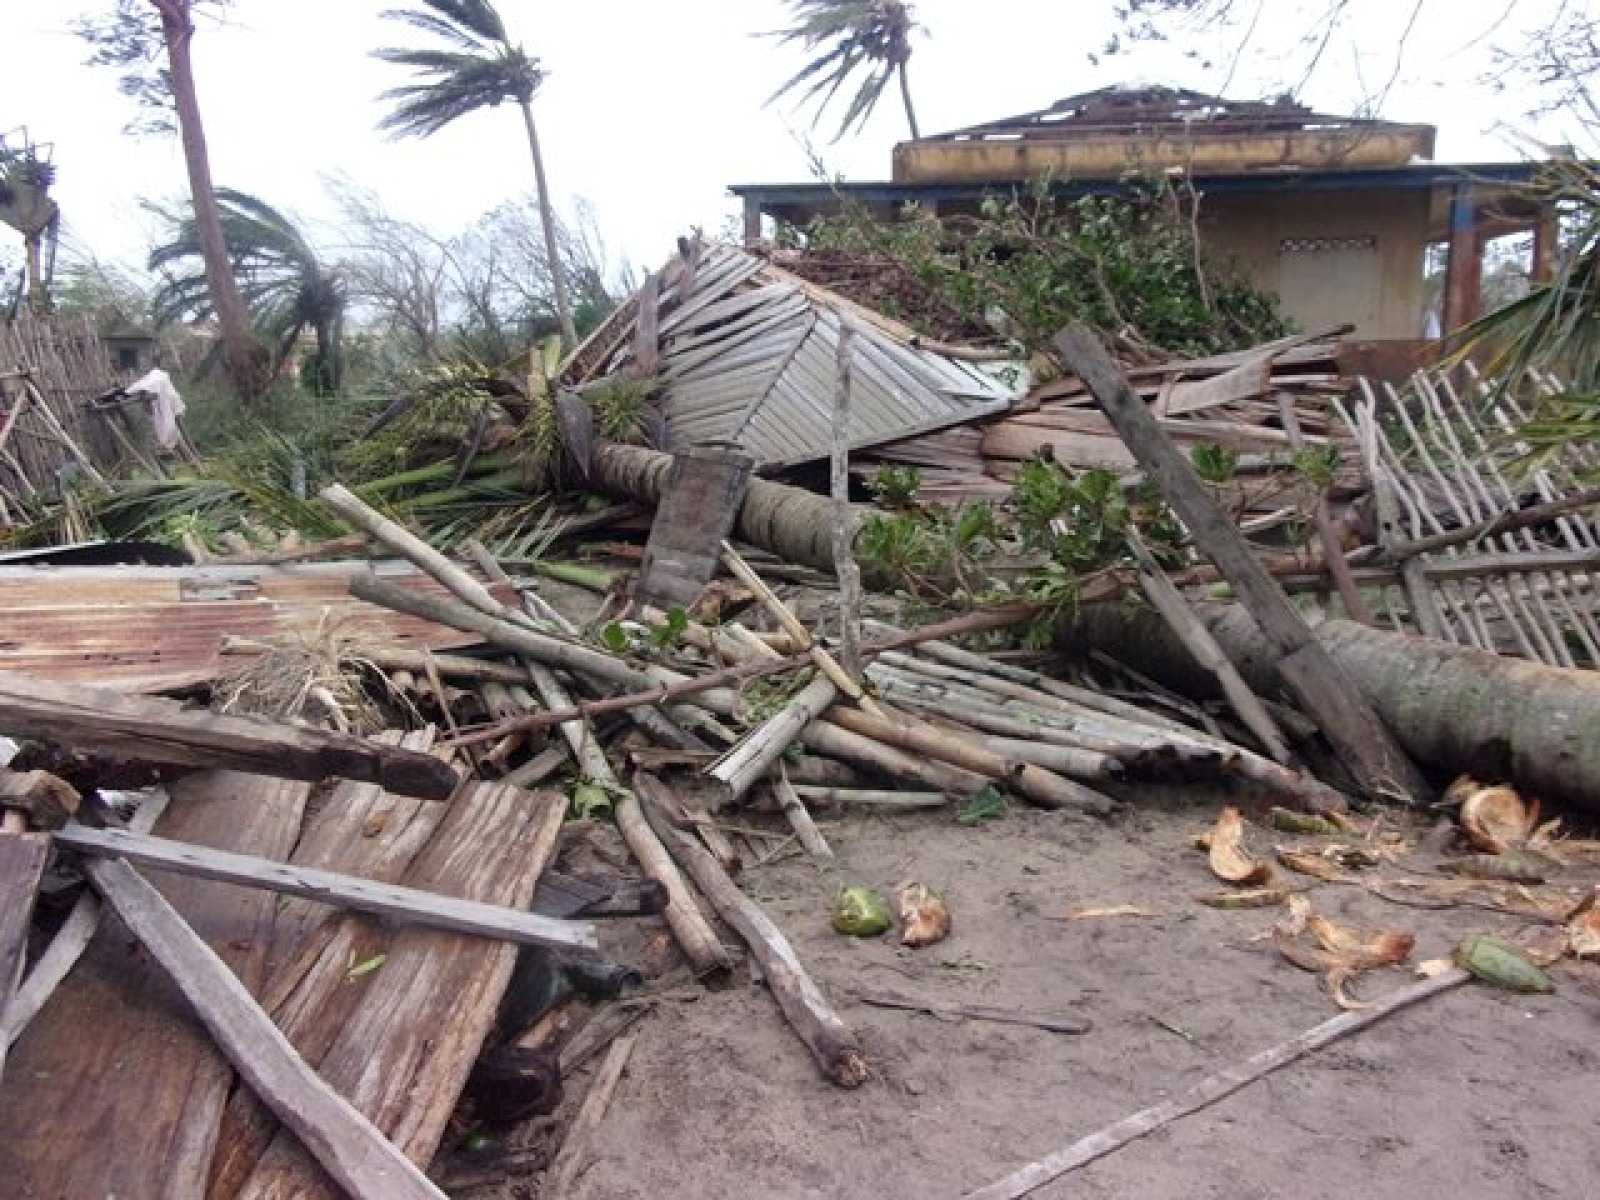 Dégâts causés par le cyclone Batsirai à Mananjary. ©A.FANANTENANA/HI